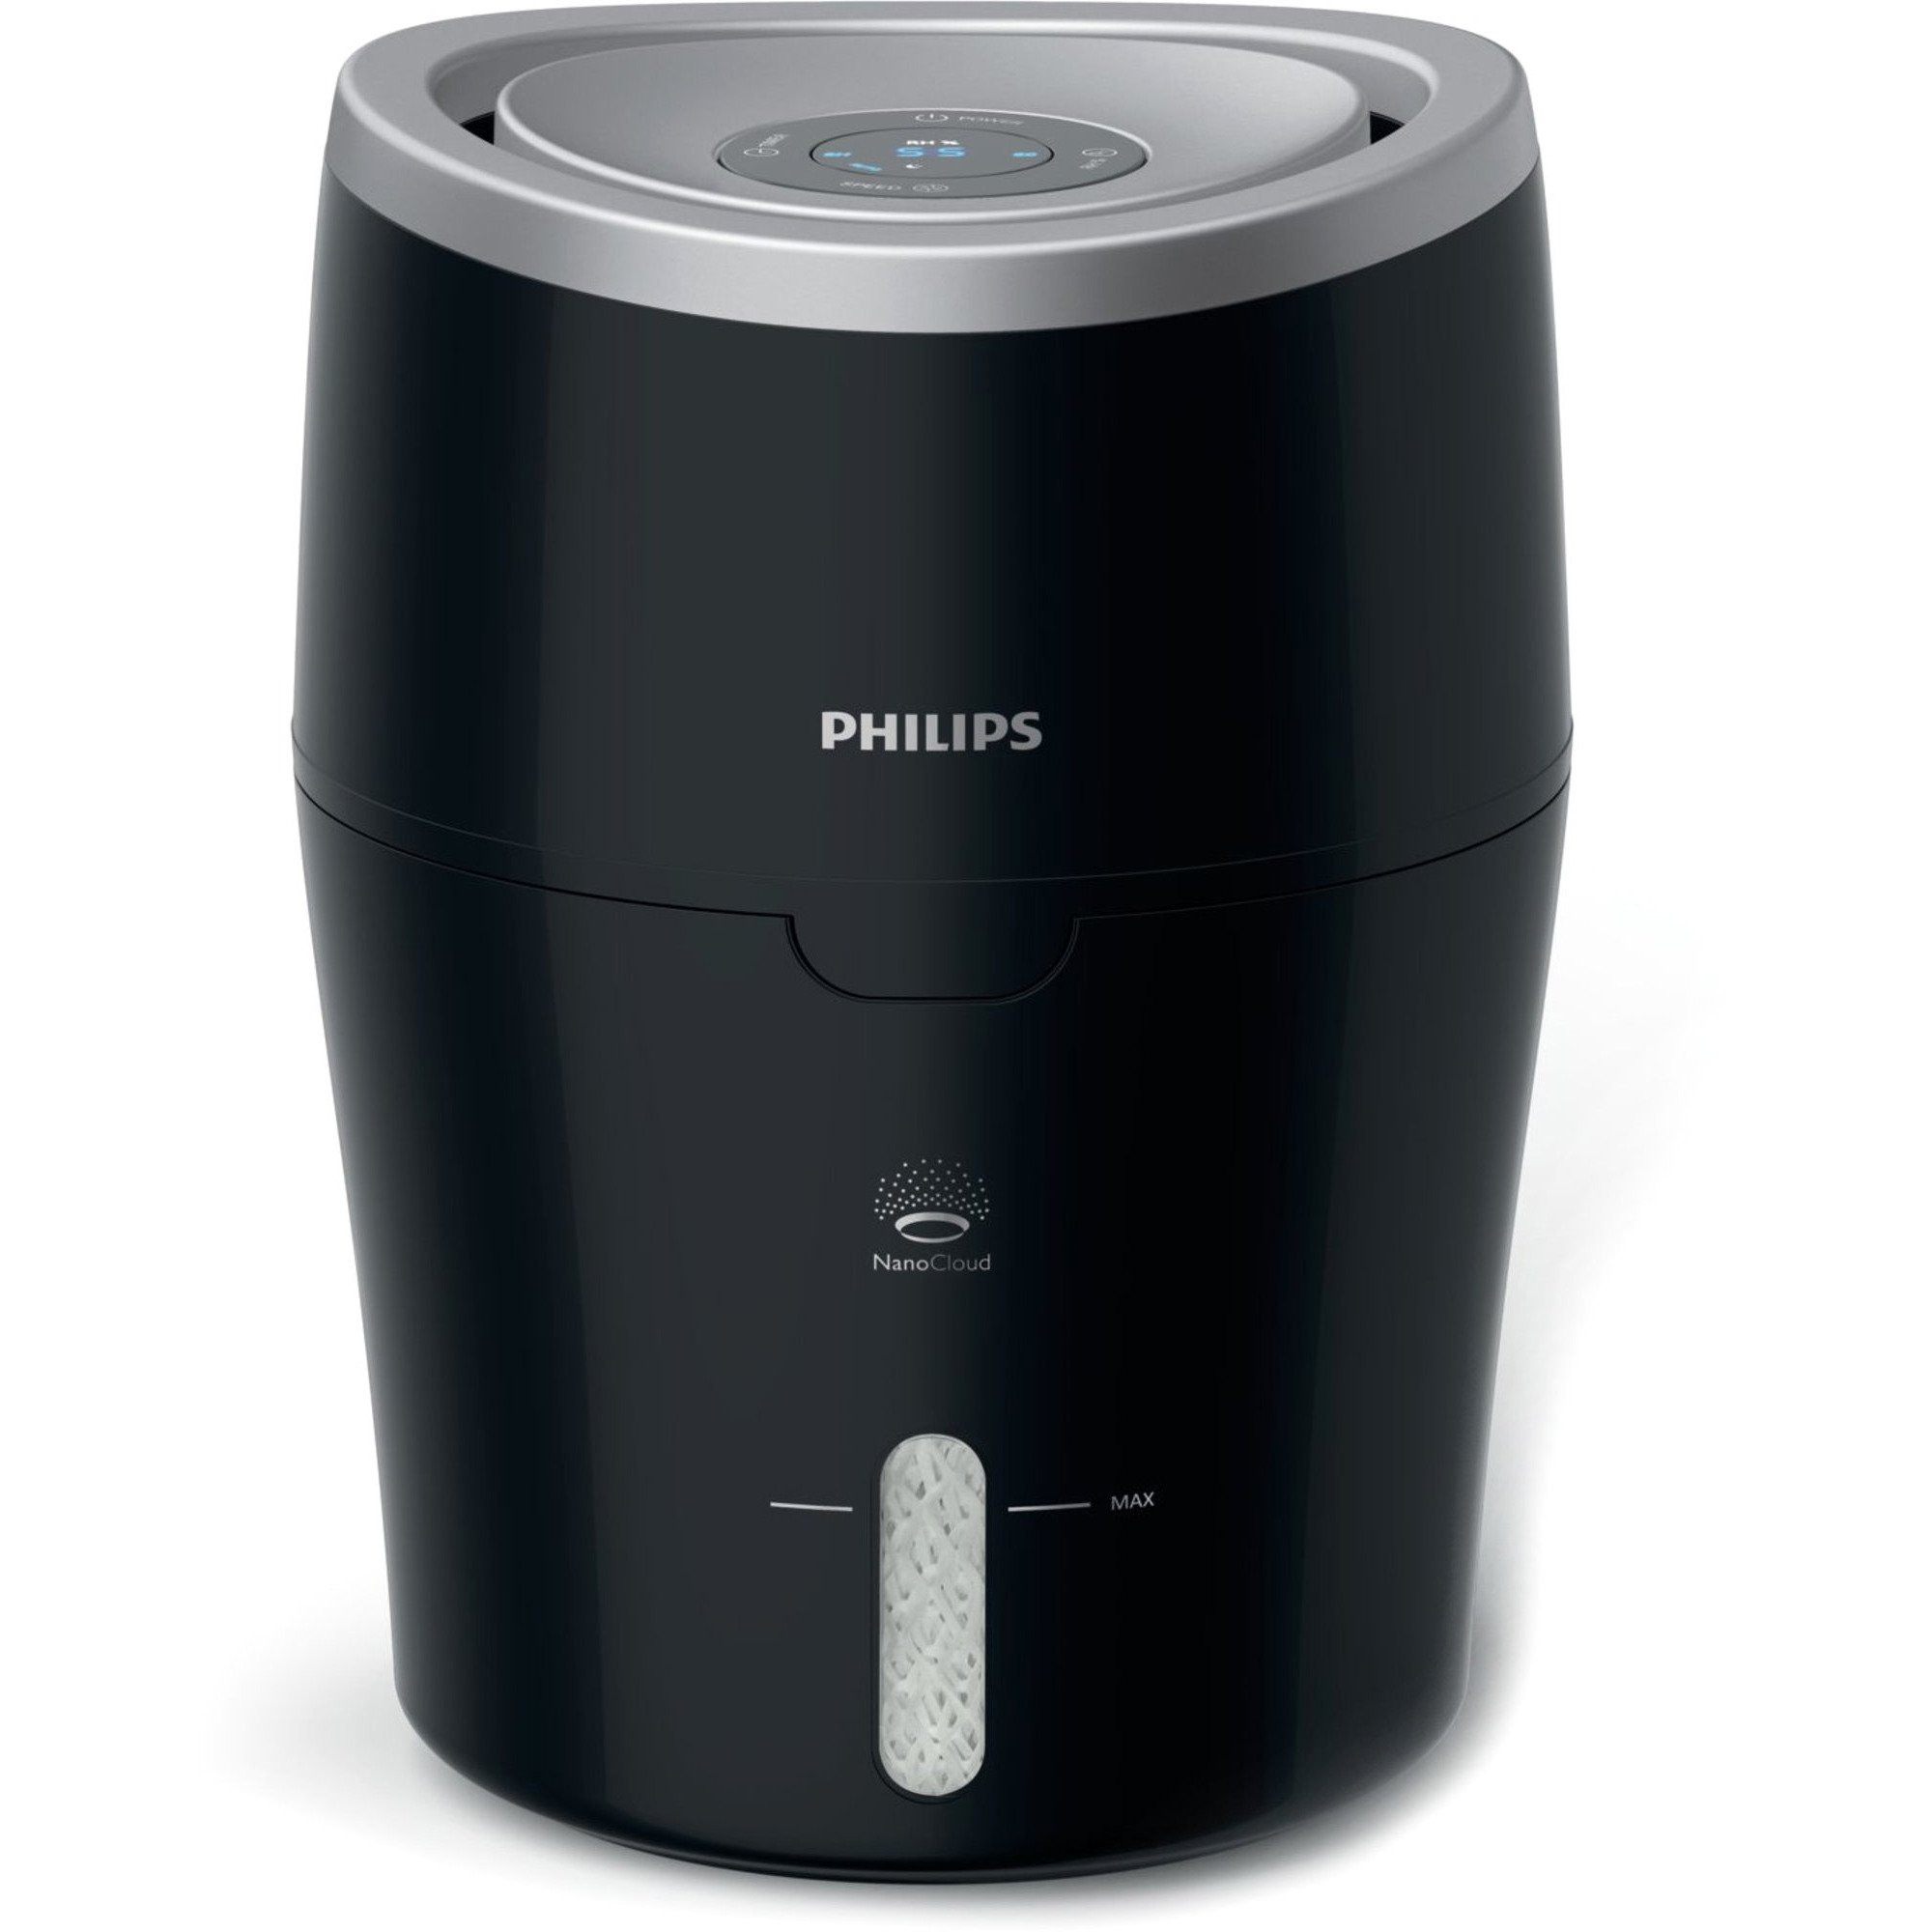 Bäst i test, Philips HU4813/10